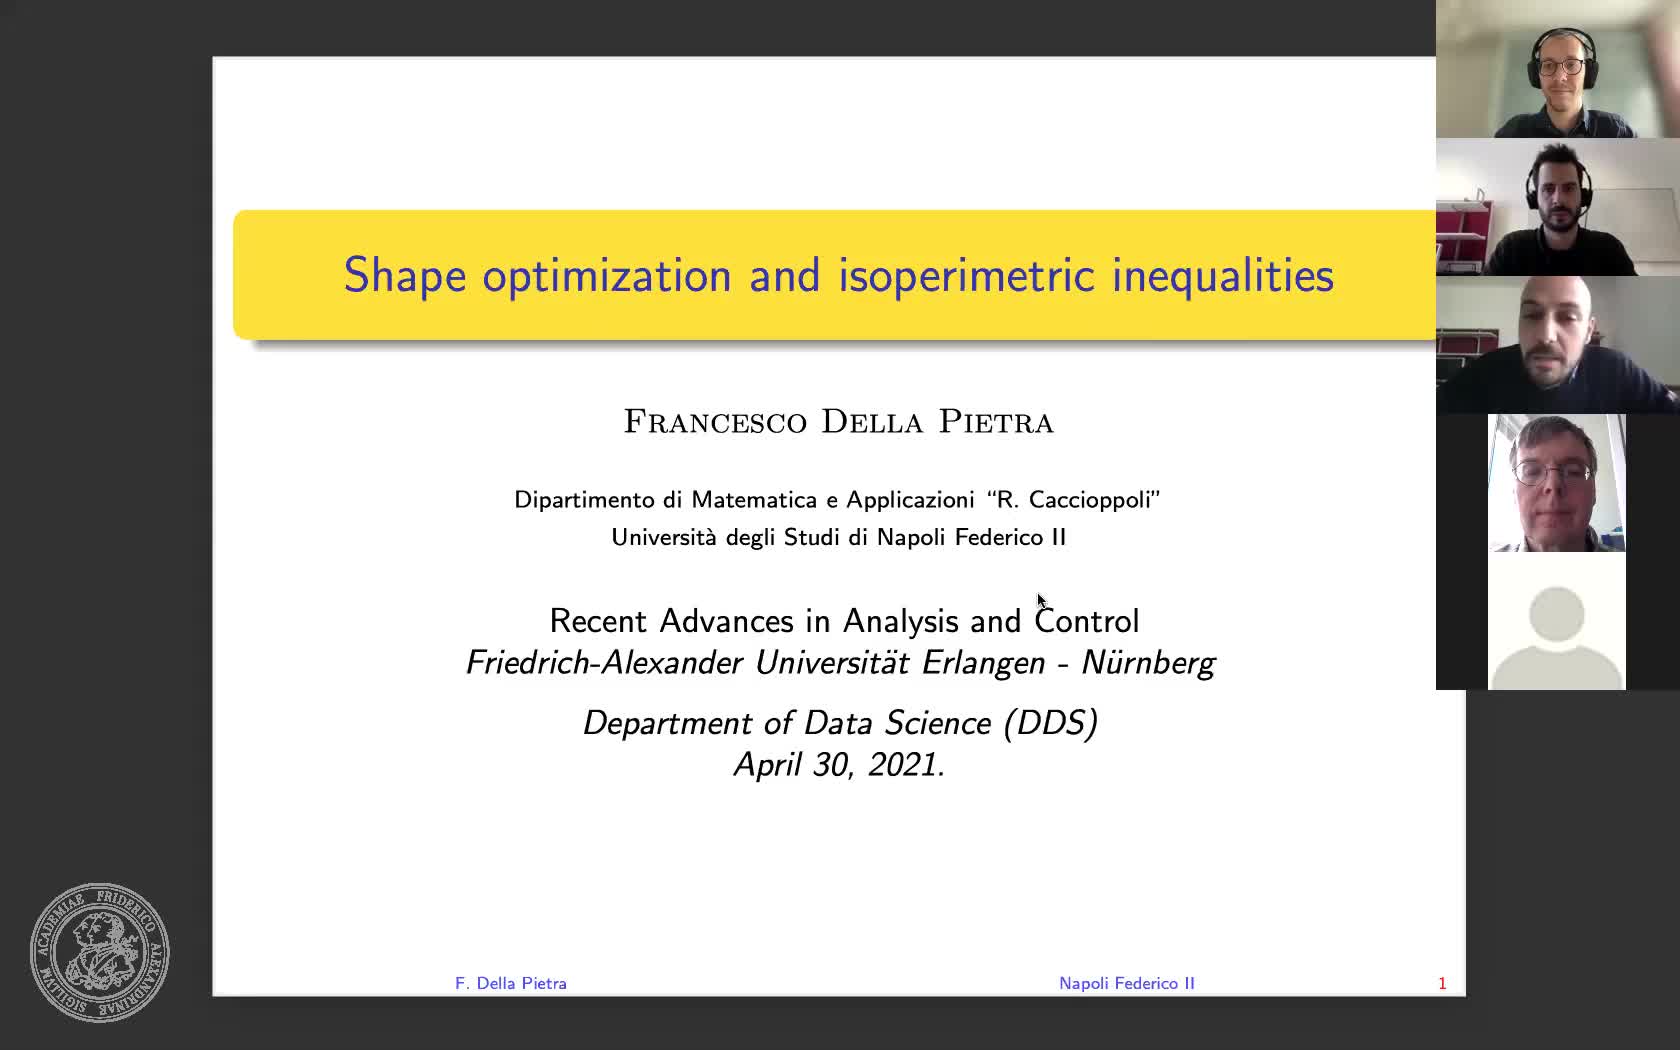 Shape optimization and isoperimetric inequalities (F. Della Pietra, University of Naples Federico II) preview image